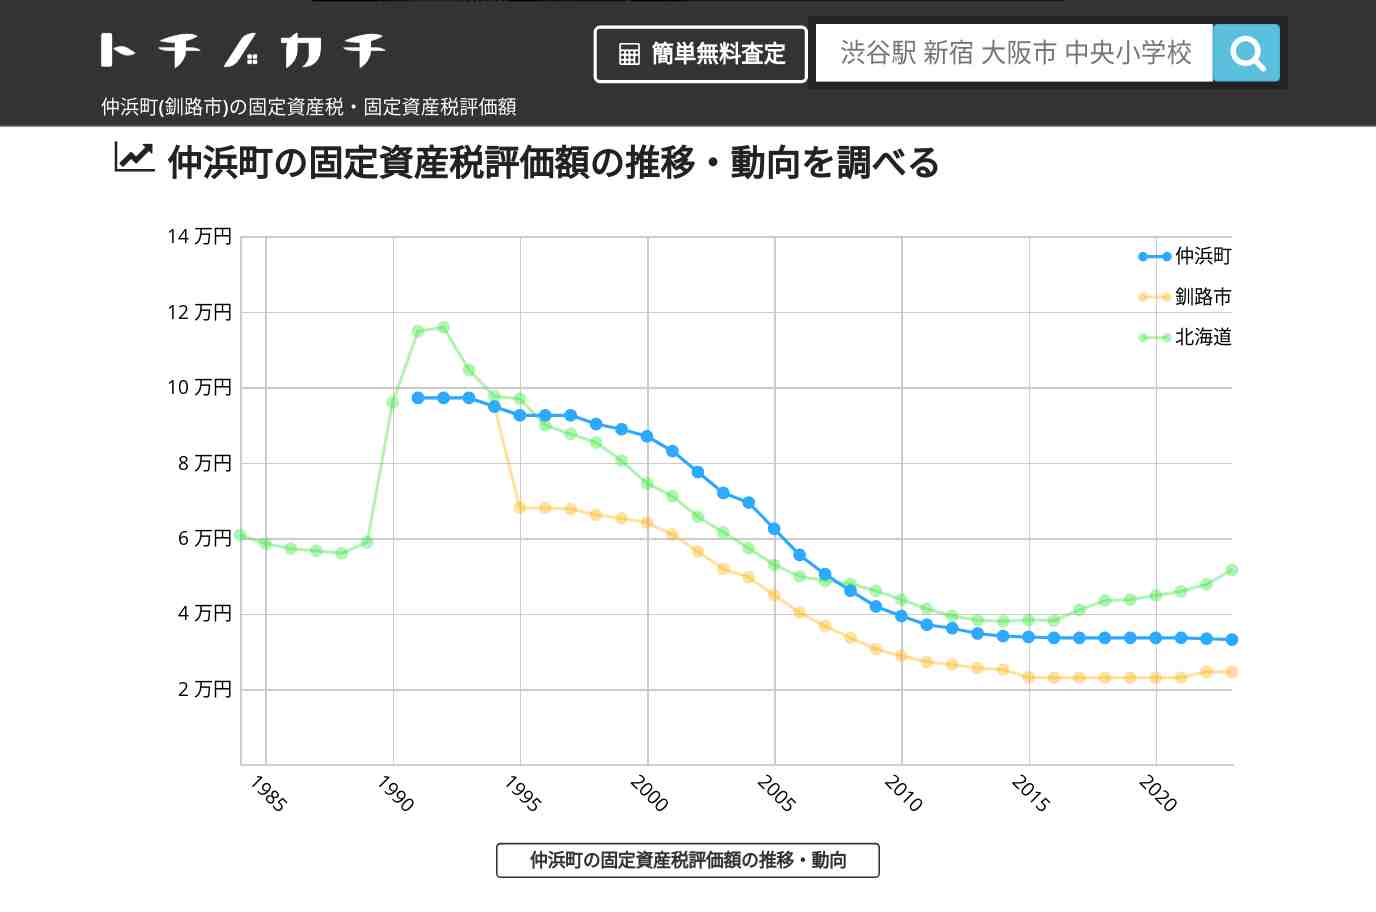 仲浜町(釧路市)の固定資産税・固定資産税評価額 | トチノカチ